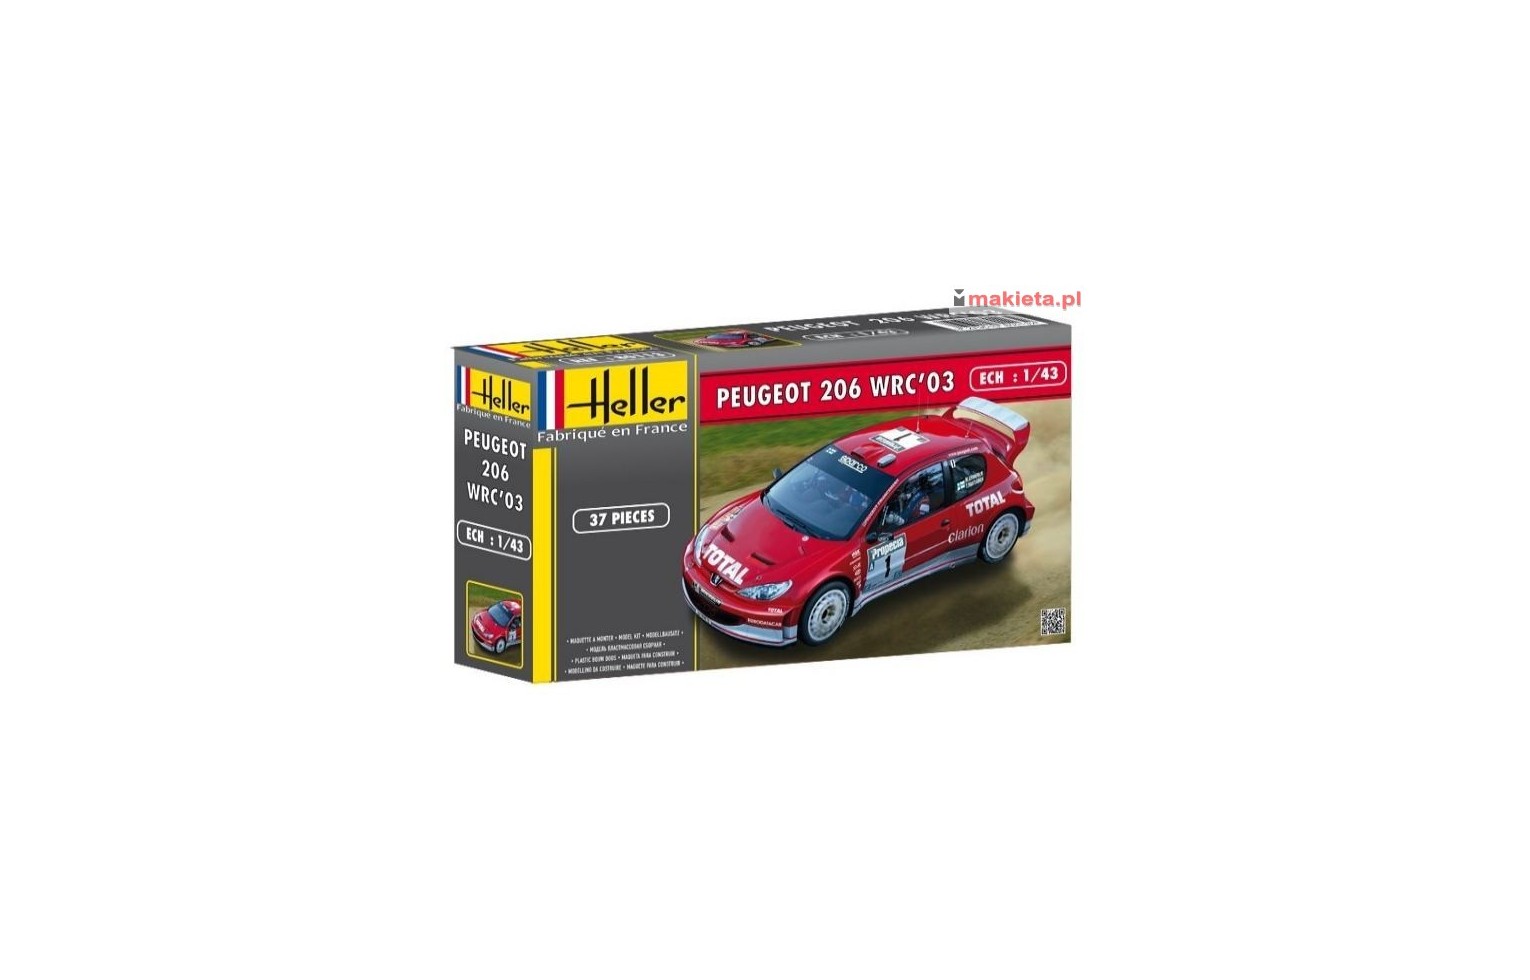 Heller 80113, Peugeot 206 WRC, skala 1:43